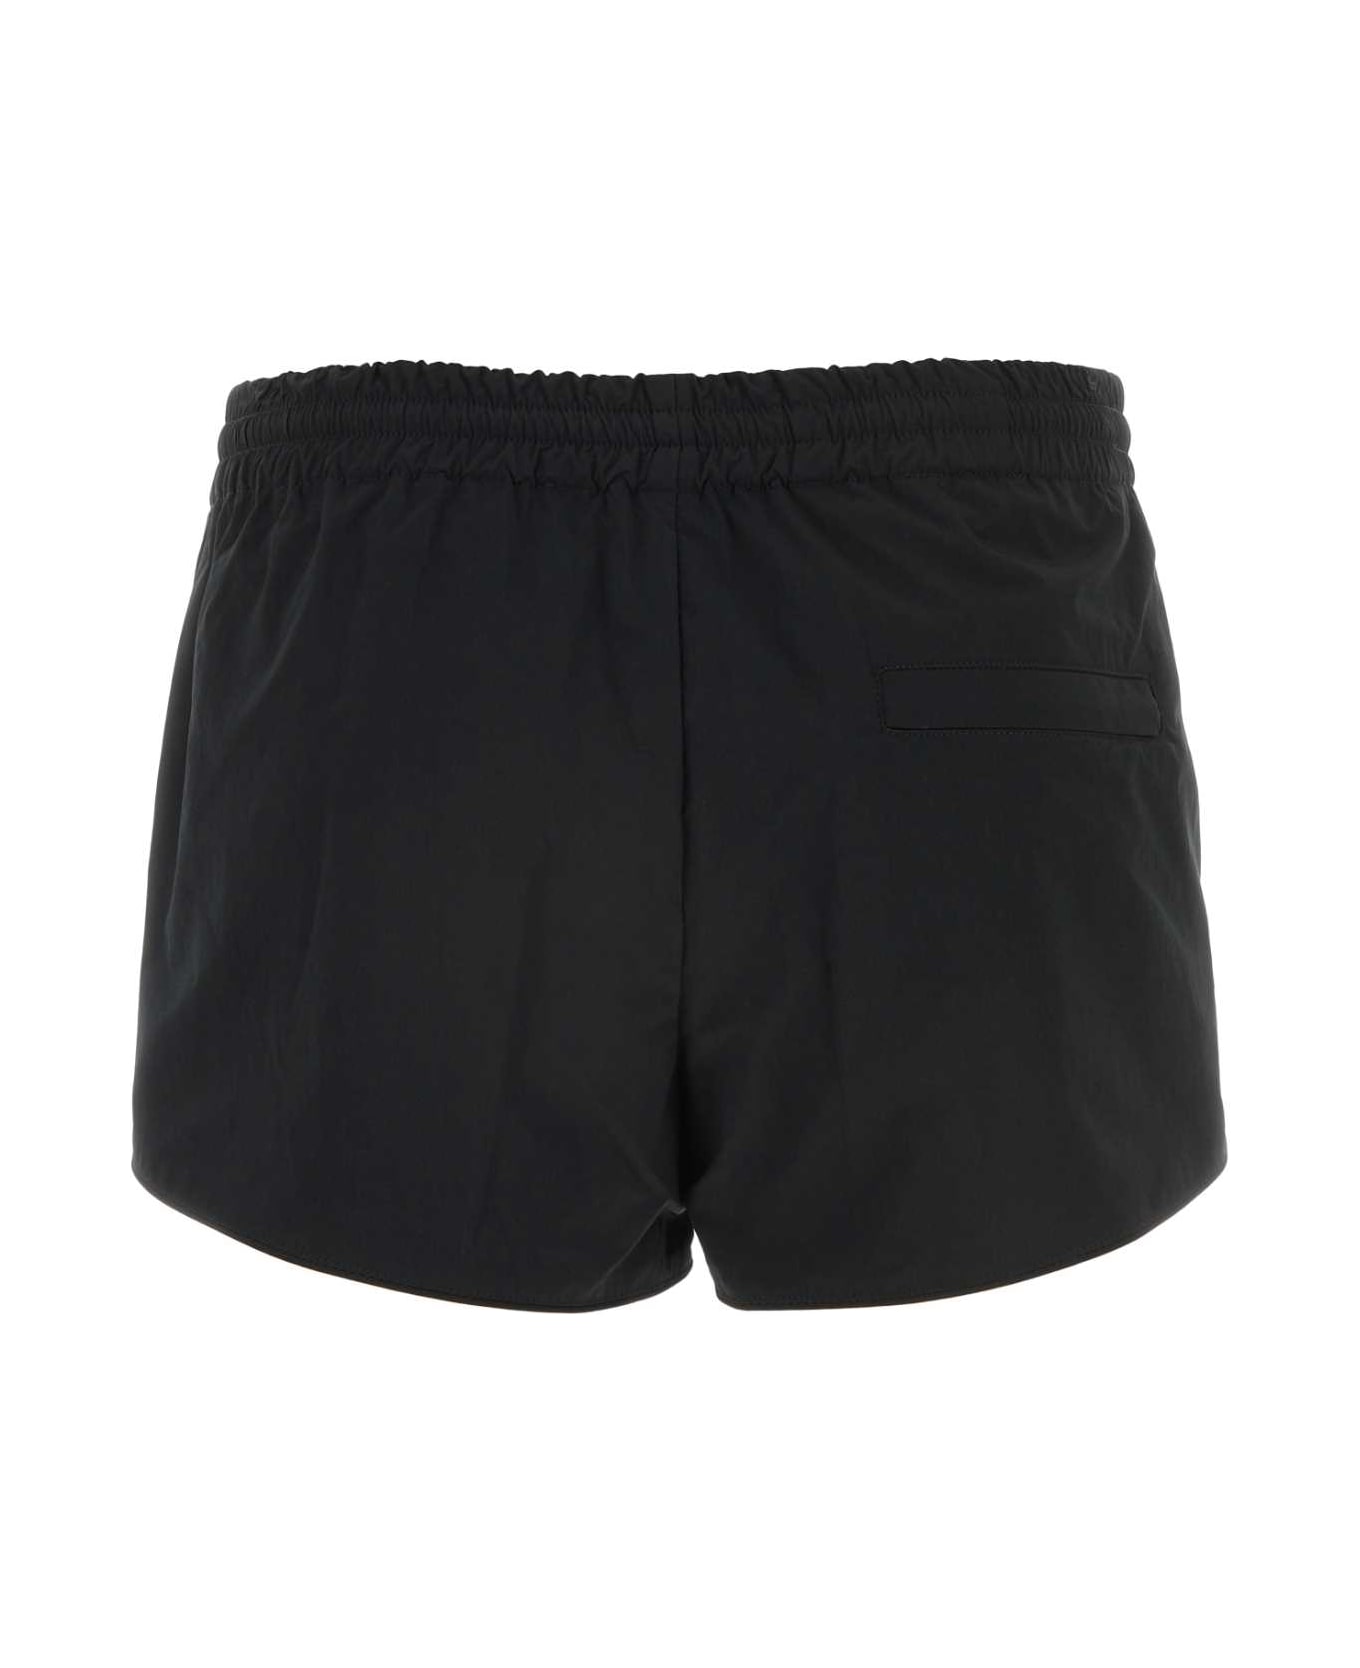 T by Alexander Wang Black Polyester Blend Shorts - Black